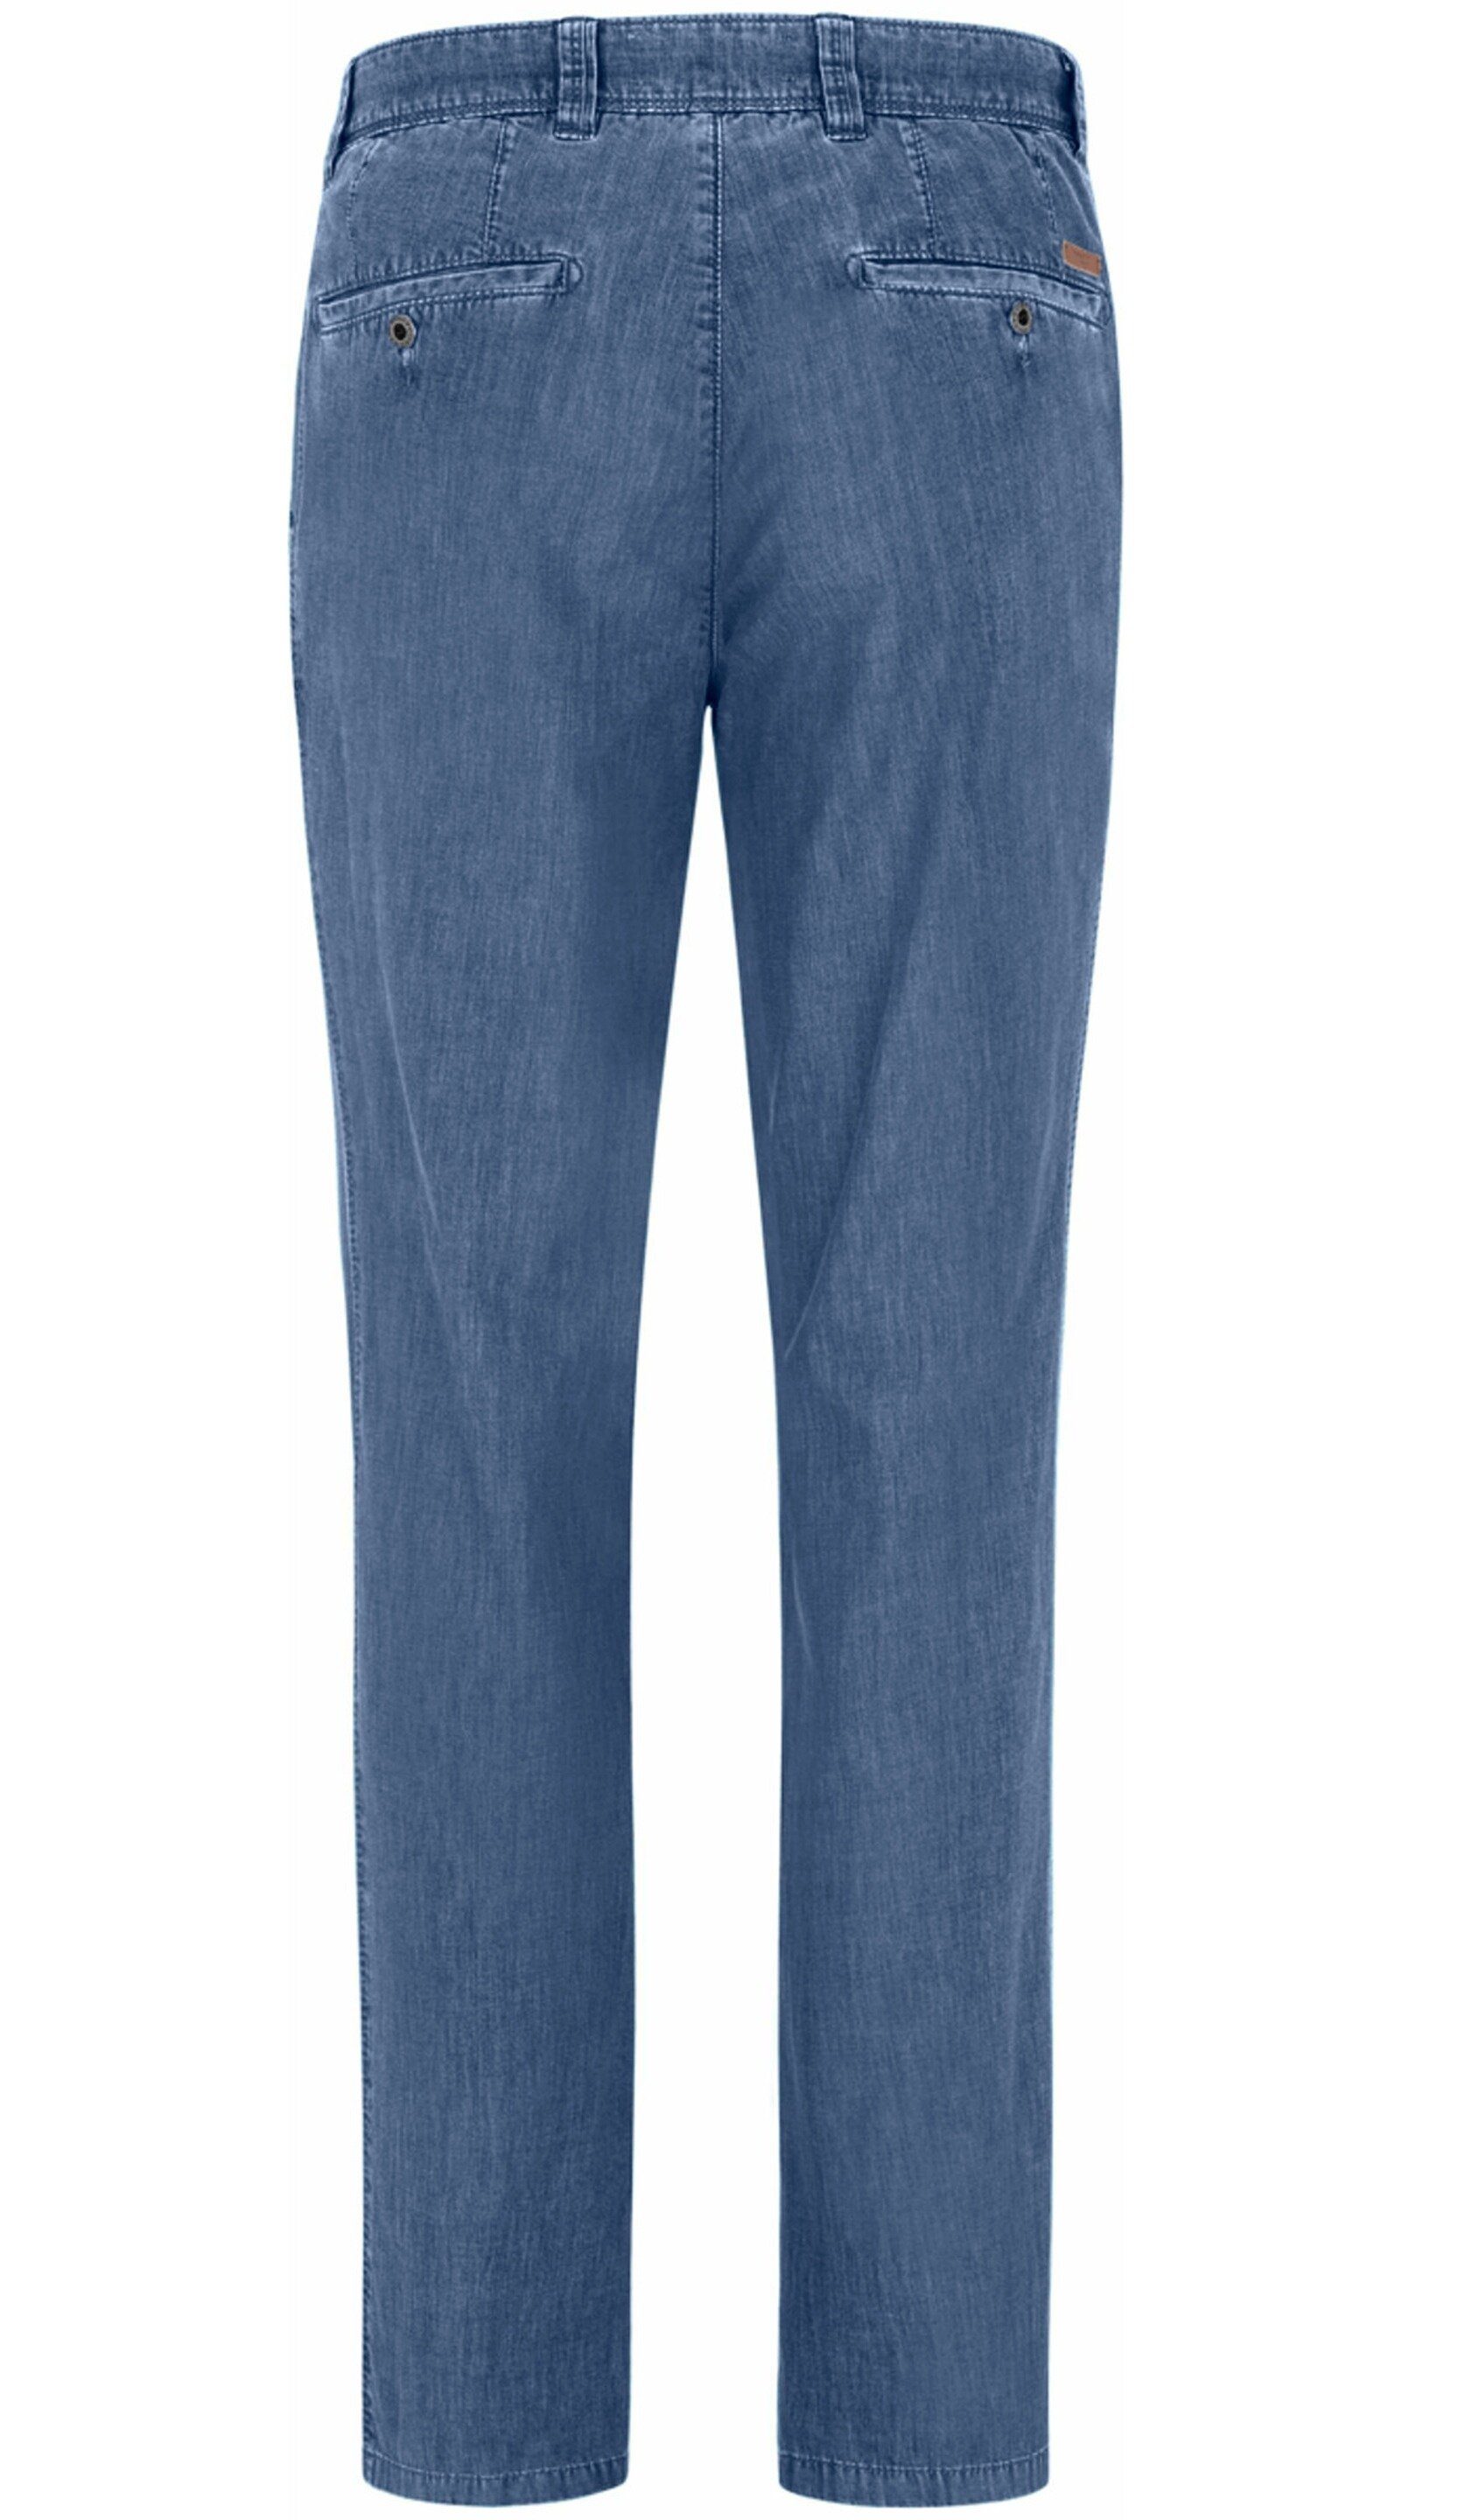 Style Light Bequeme Jeans Flat-Front-Jeans John BY BRAX EUREX JOHN, BRAX EUREX blau by Pima Denim